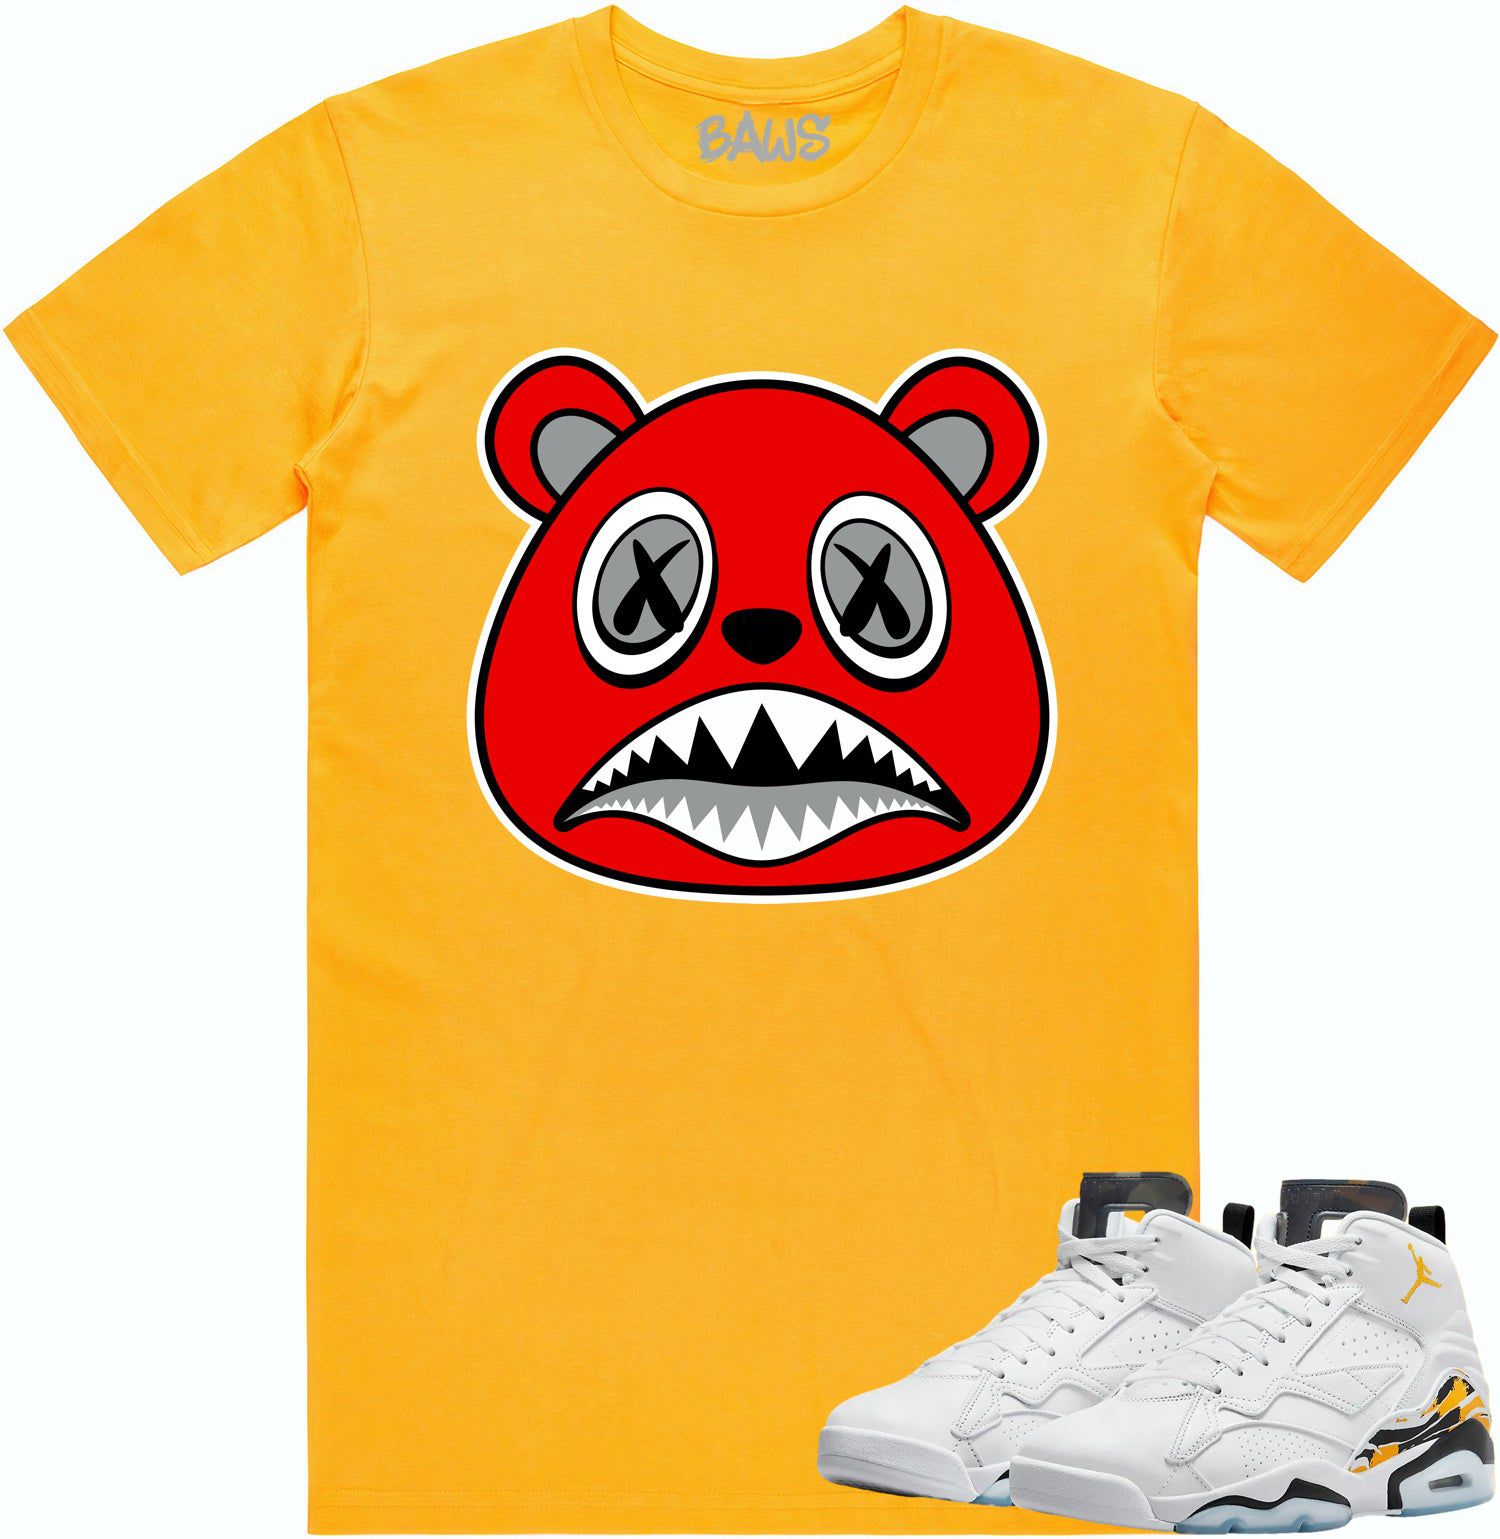 Jordan MVP 678 Yellow Ochre Shirt - Ochre Sneaker Tees - Angry Baws